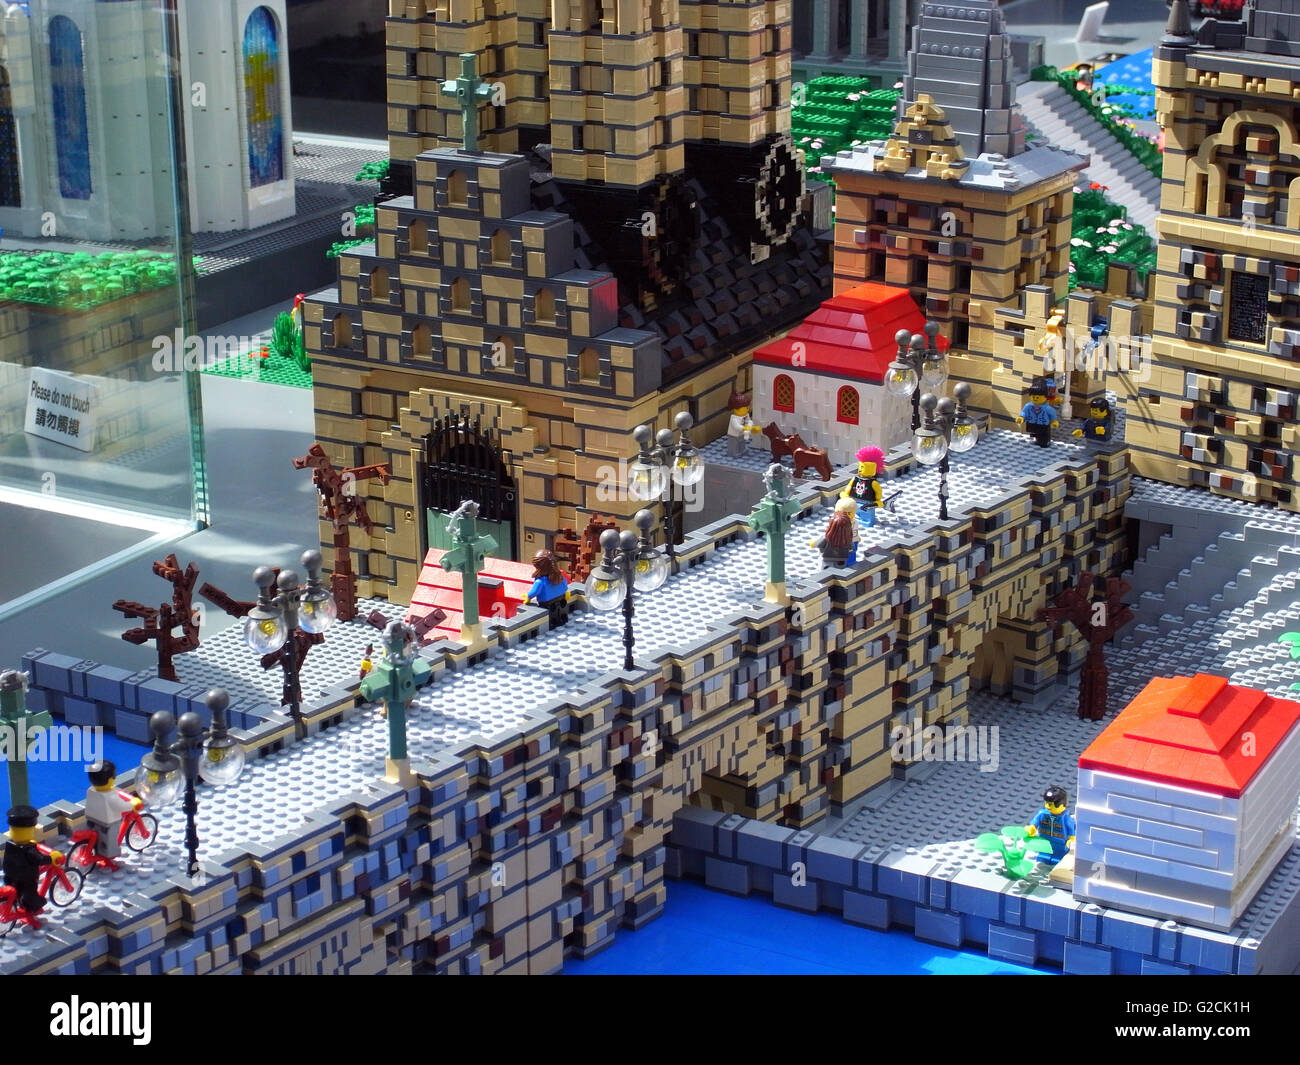 Contrato Basura Nombre provisional Modelo de construcción Lego juguete divertido paisaje Reino Unido  Inglaterra Puente del Big Ben de Londres Támesis Fotografía de stock - Alamy